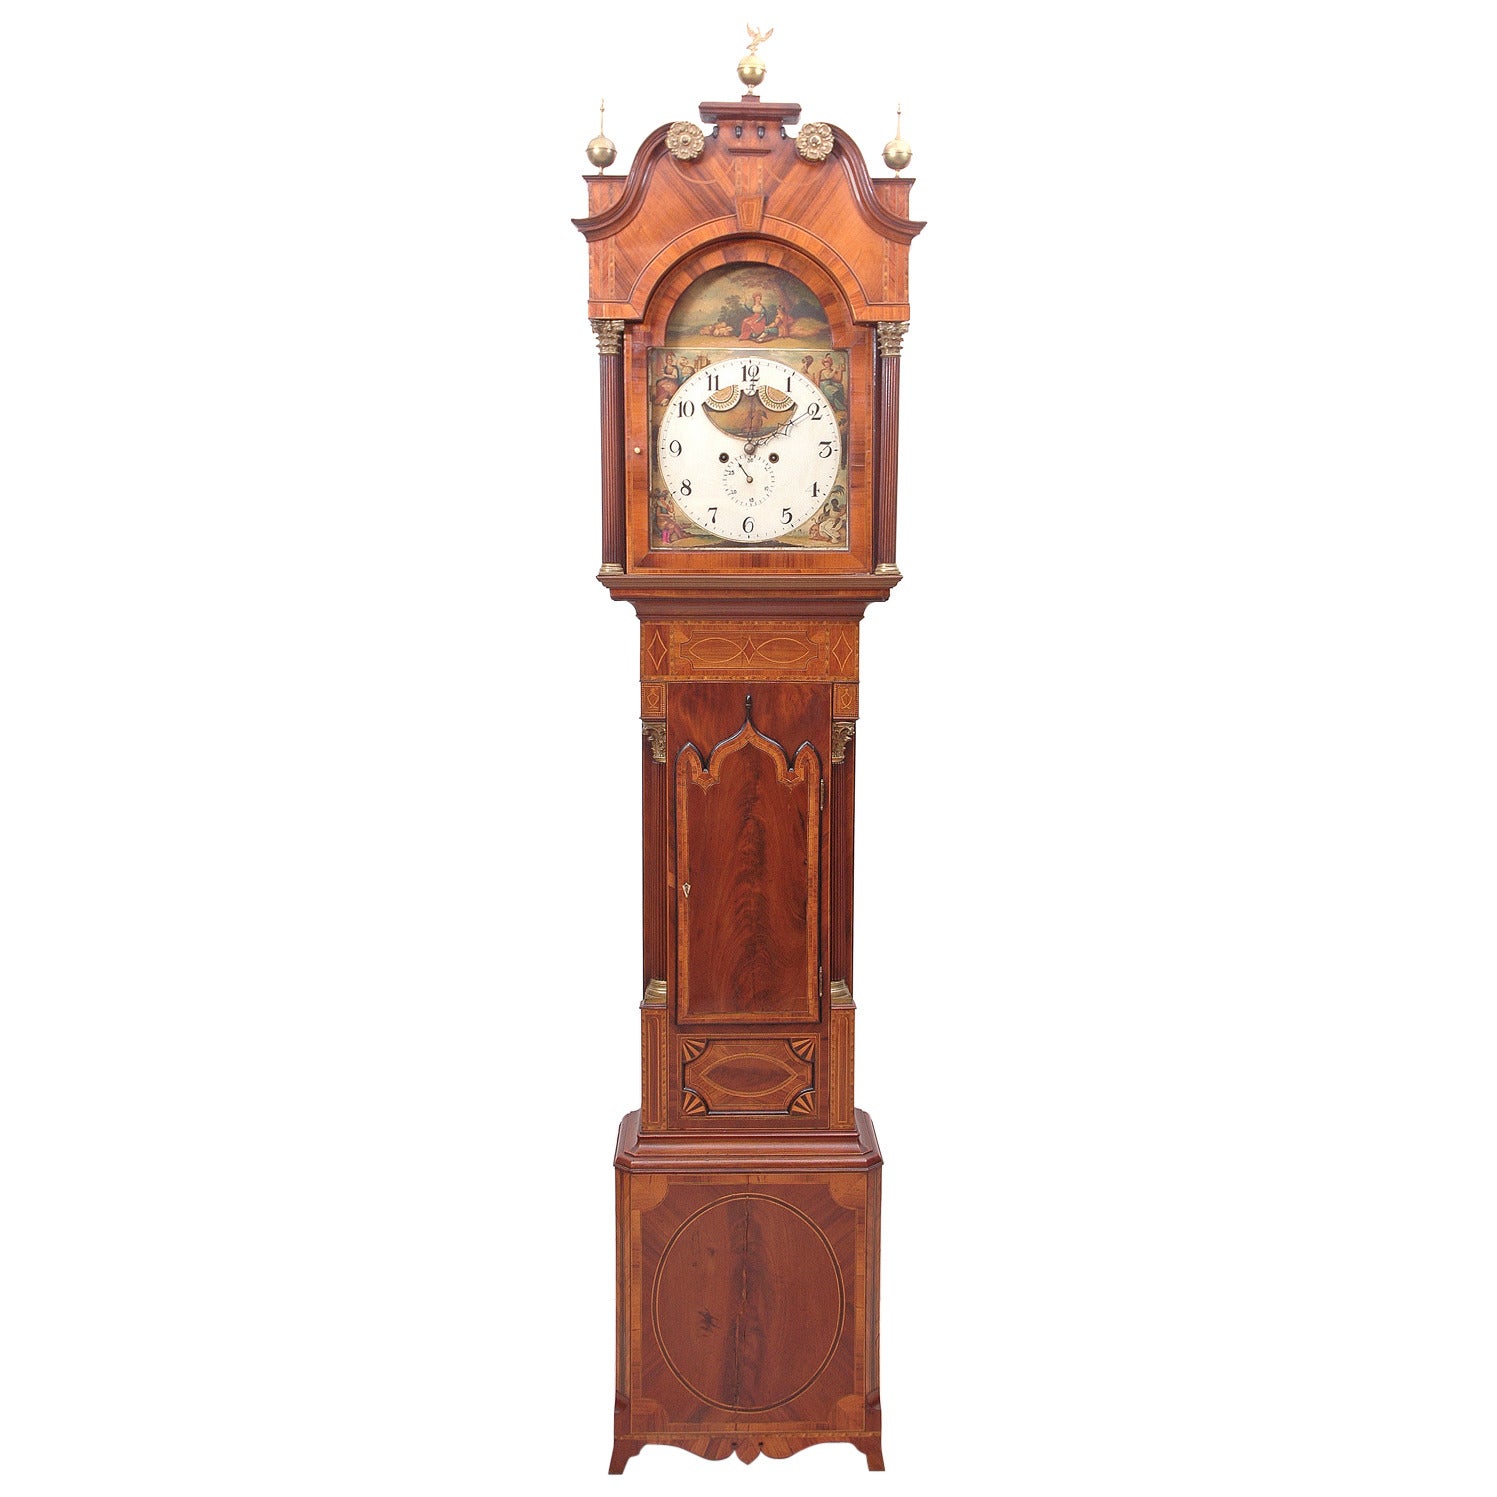 English Regency Clock, Decorative Painting by Finnemore of Birmingham